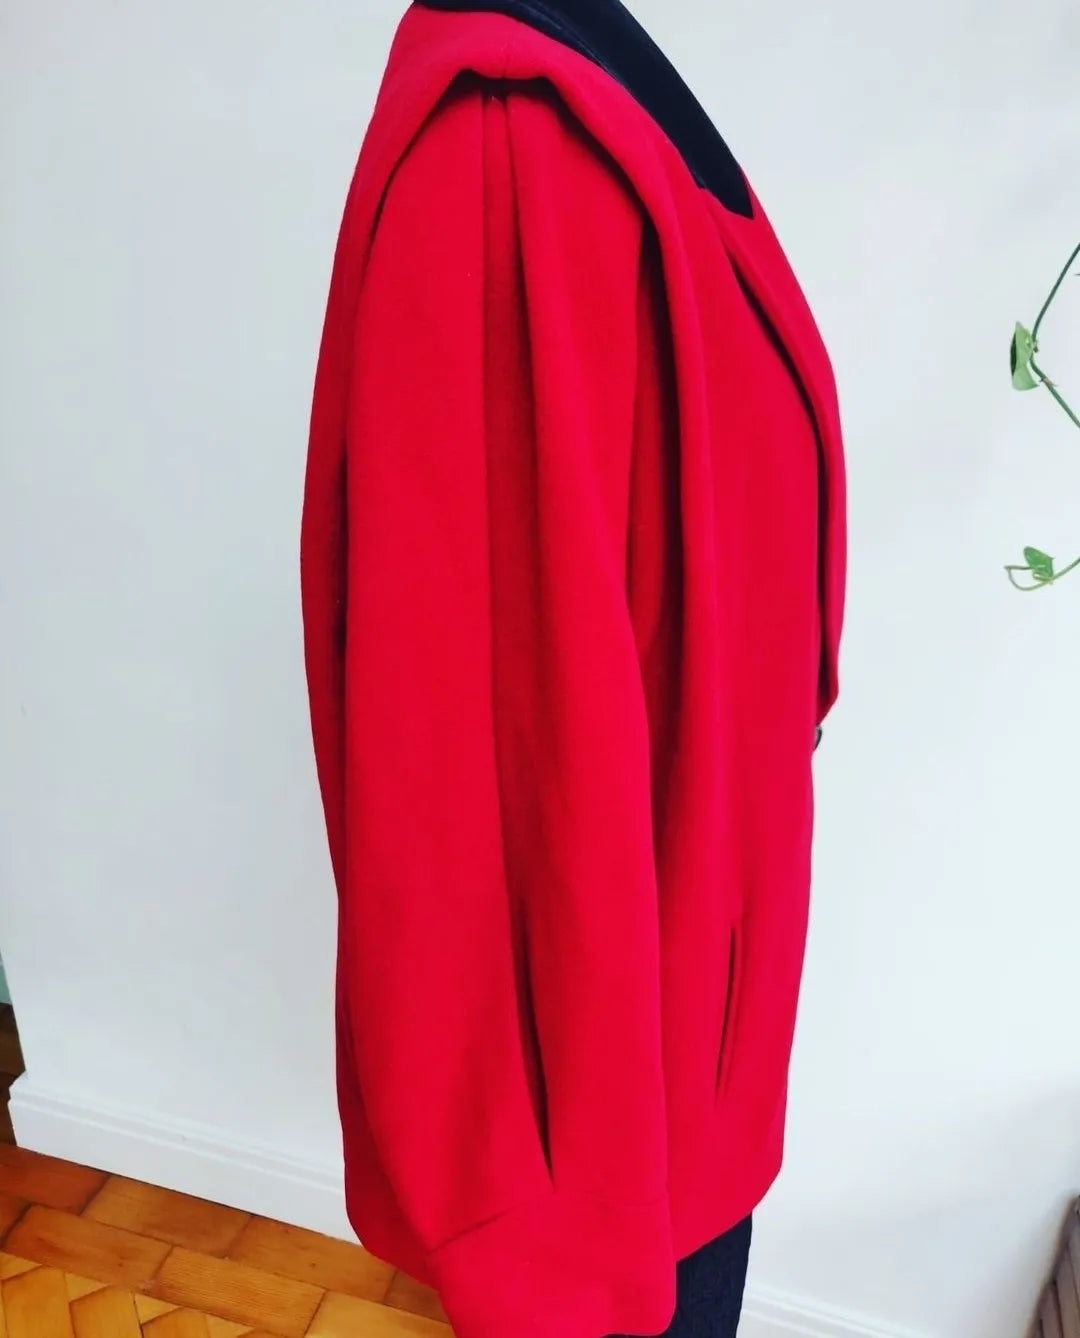 Red vintage plus size wool winter coat. Black velvet collar. Size 22-24 -26.